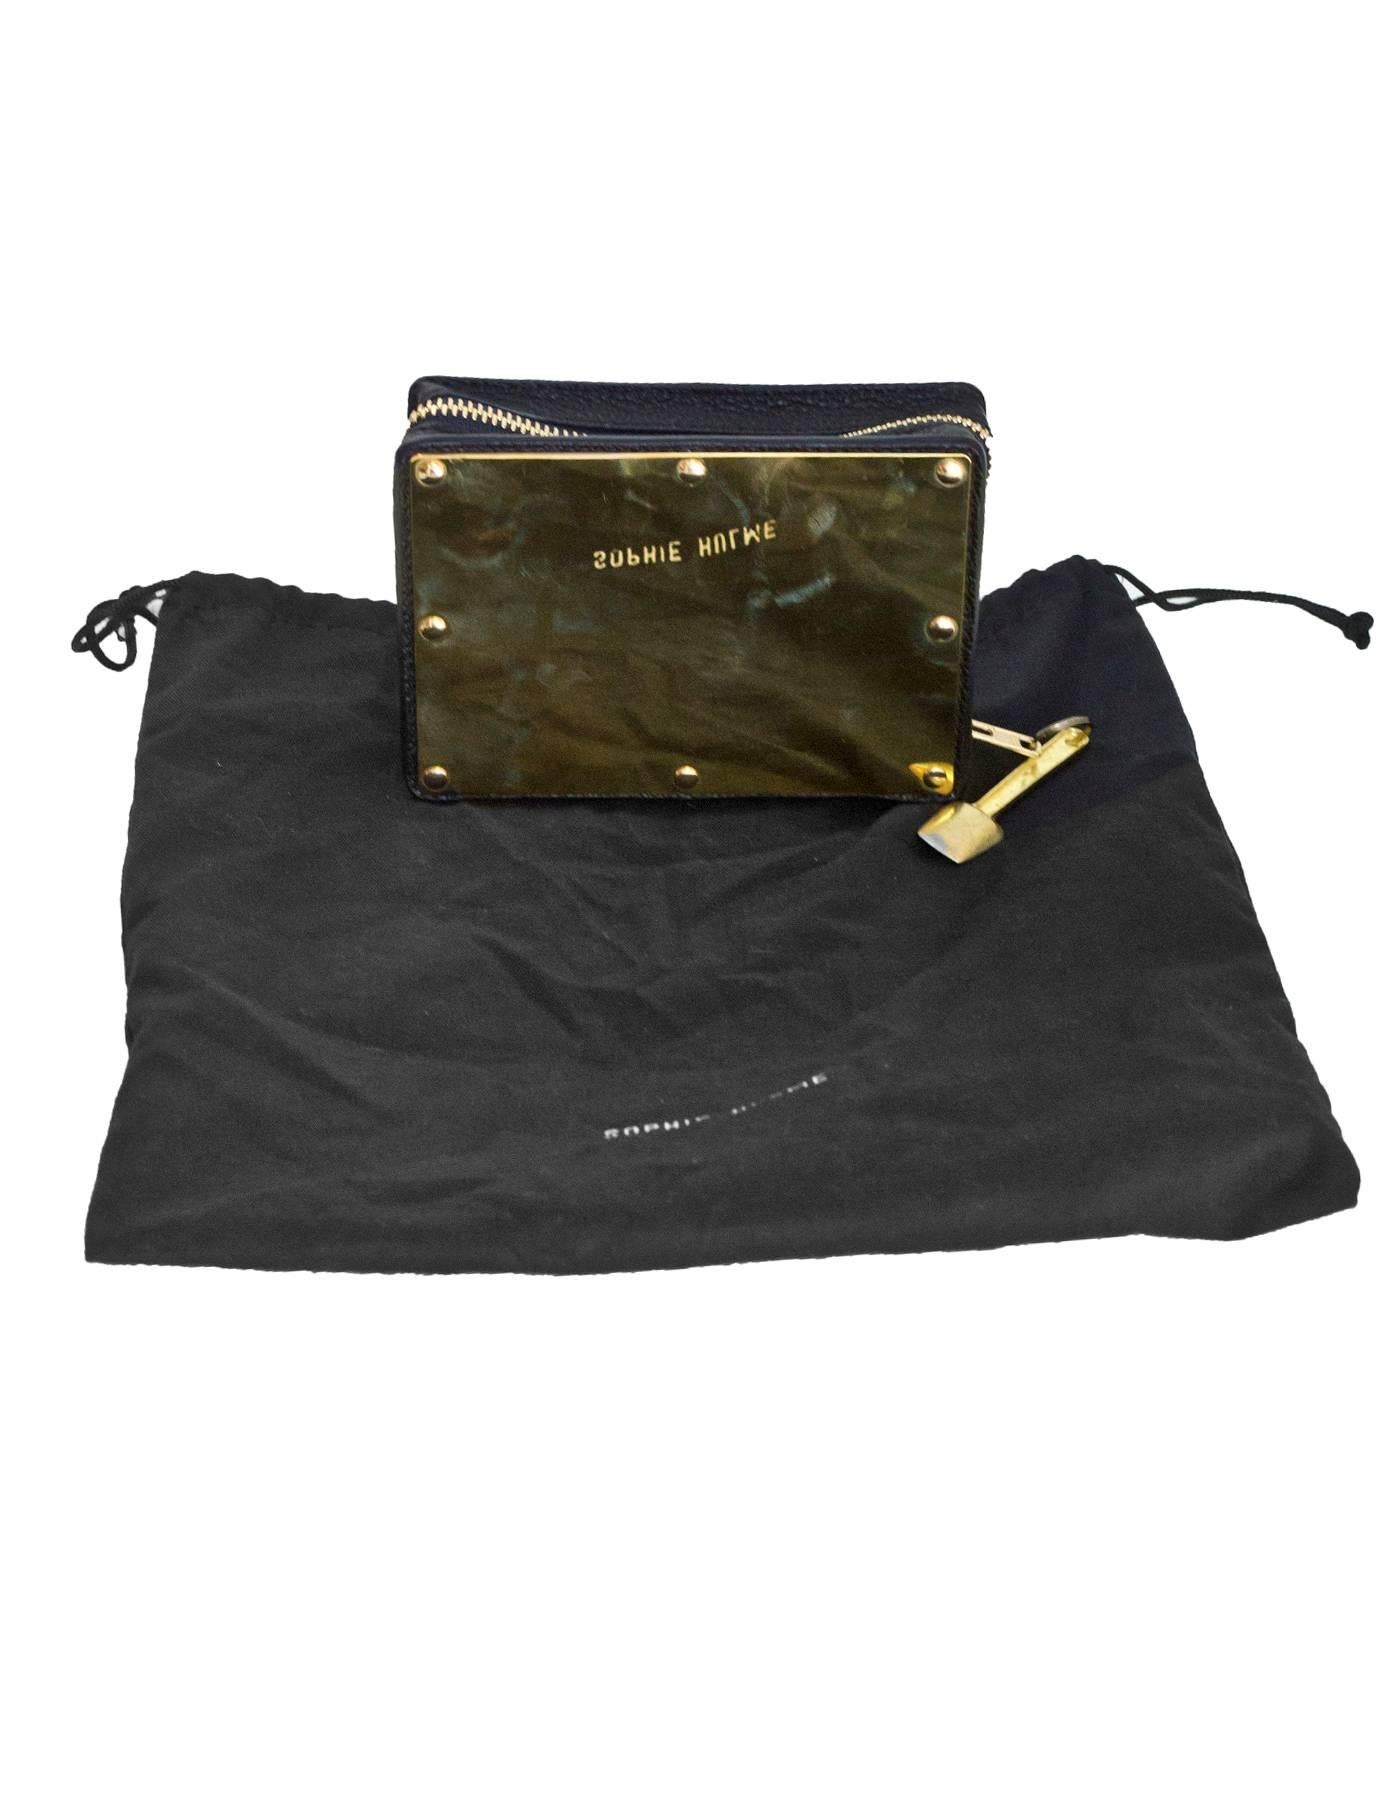 Sophie Hulme Goldtone Box Clutch Bag with Dust Bag 1